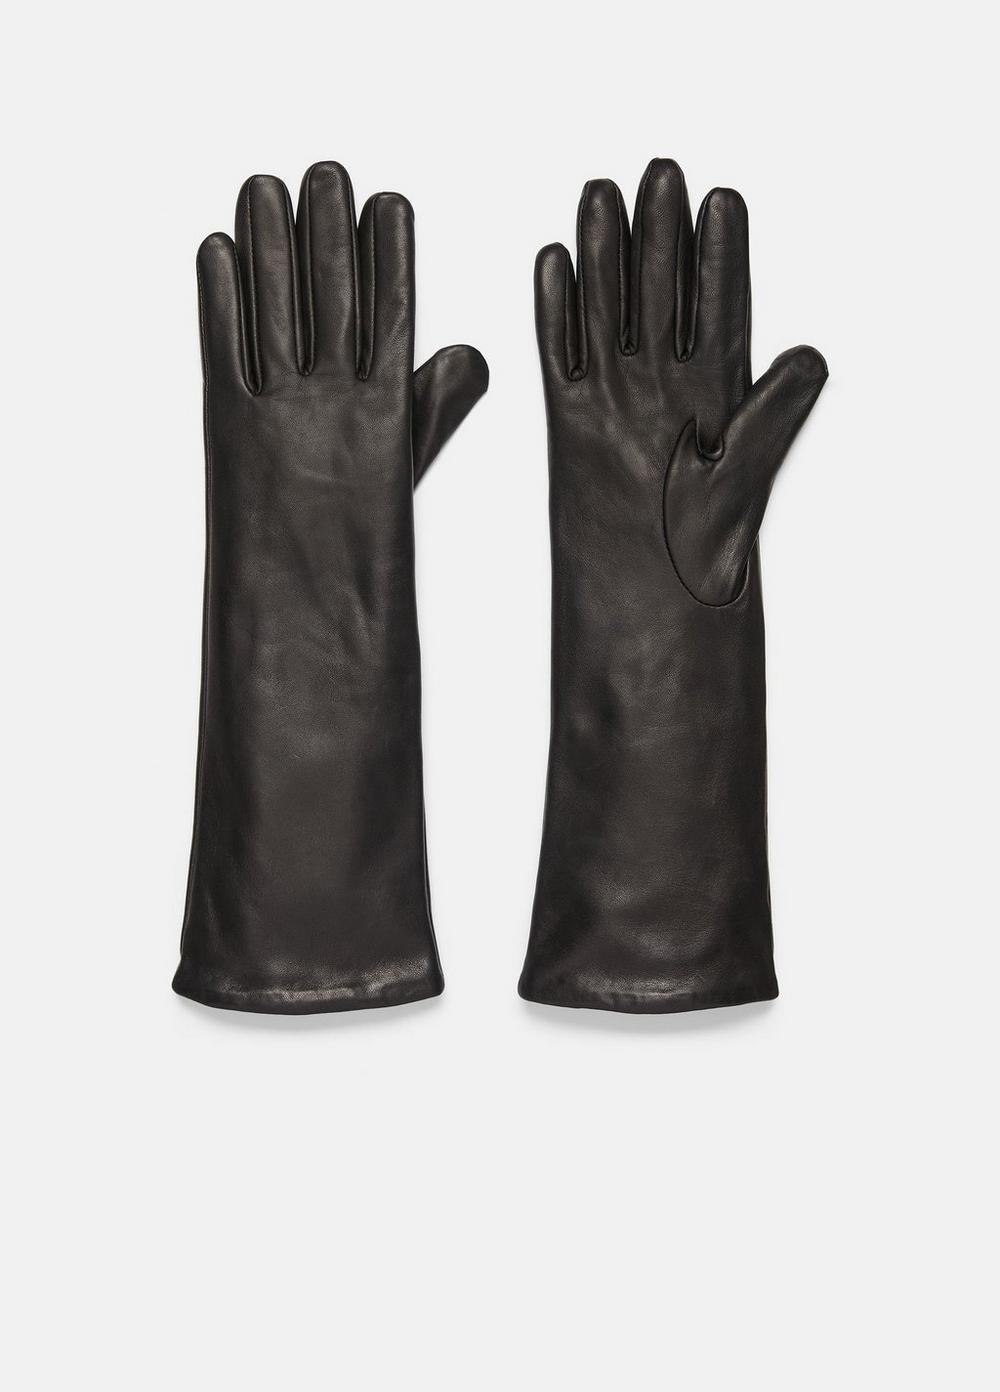 Cashmere-Lined Medium Leather Glove, Black, Size M Vince